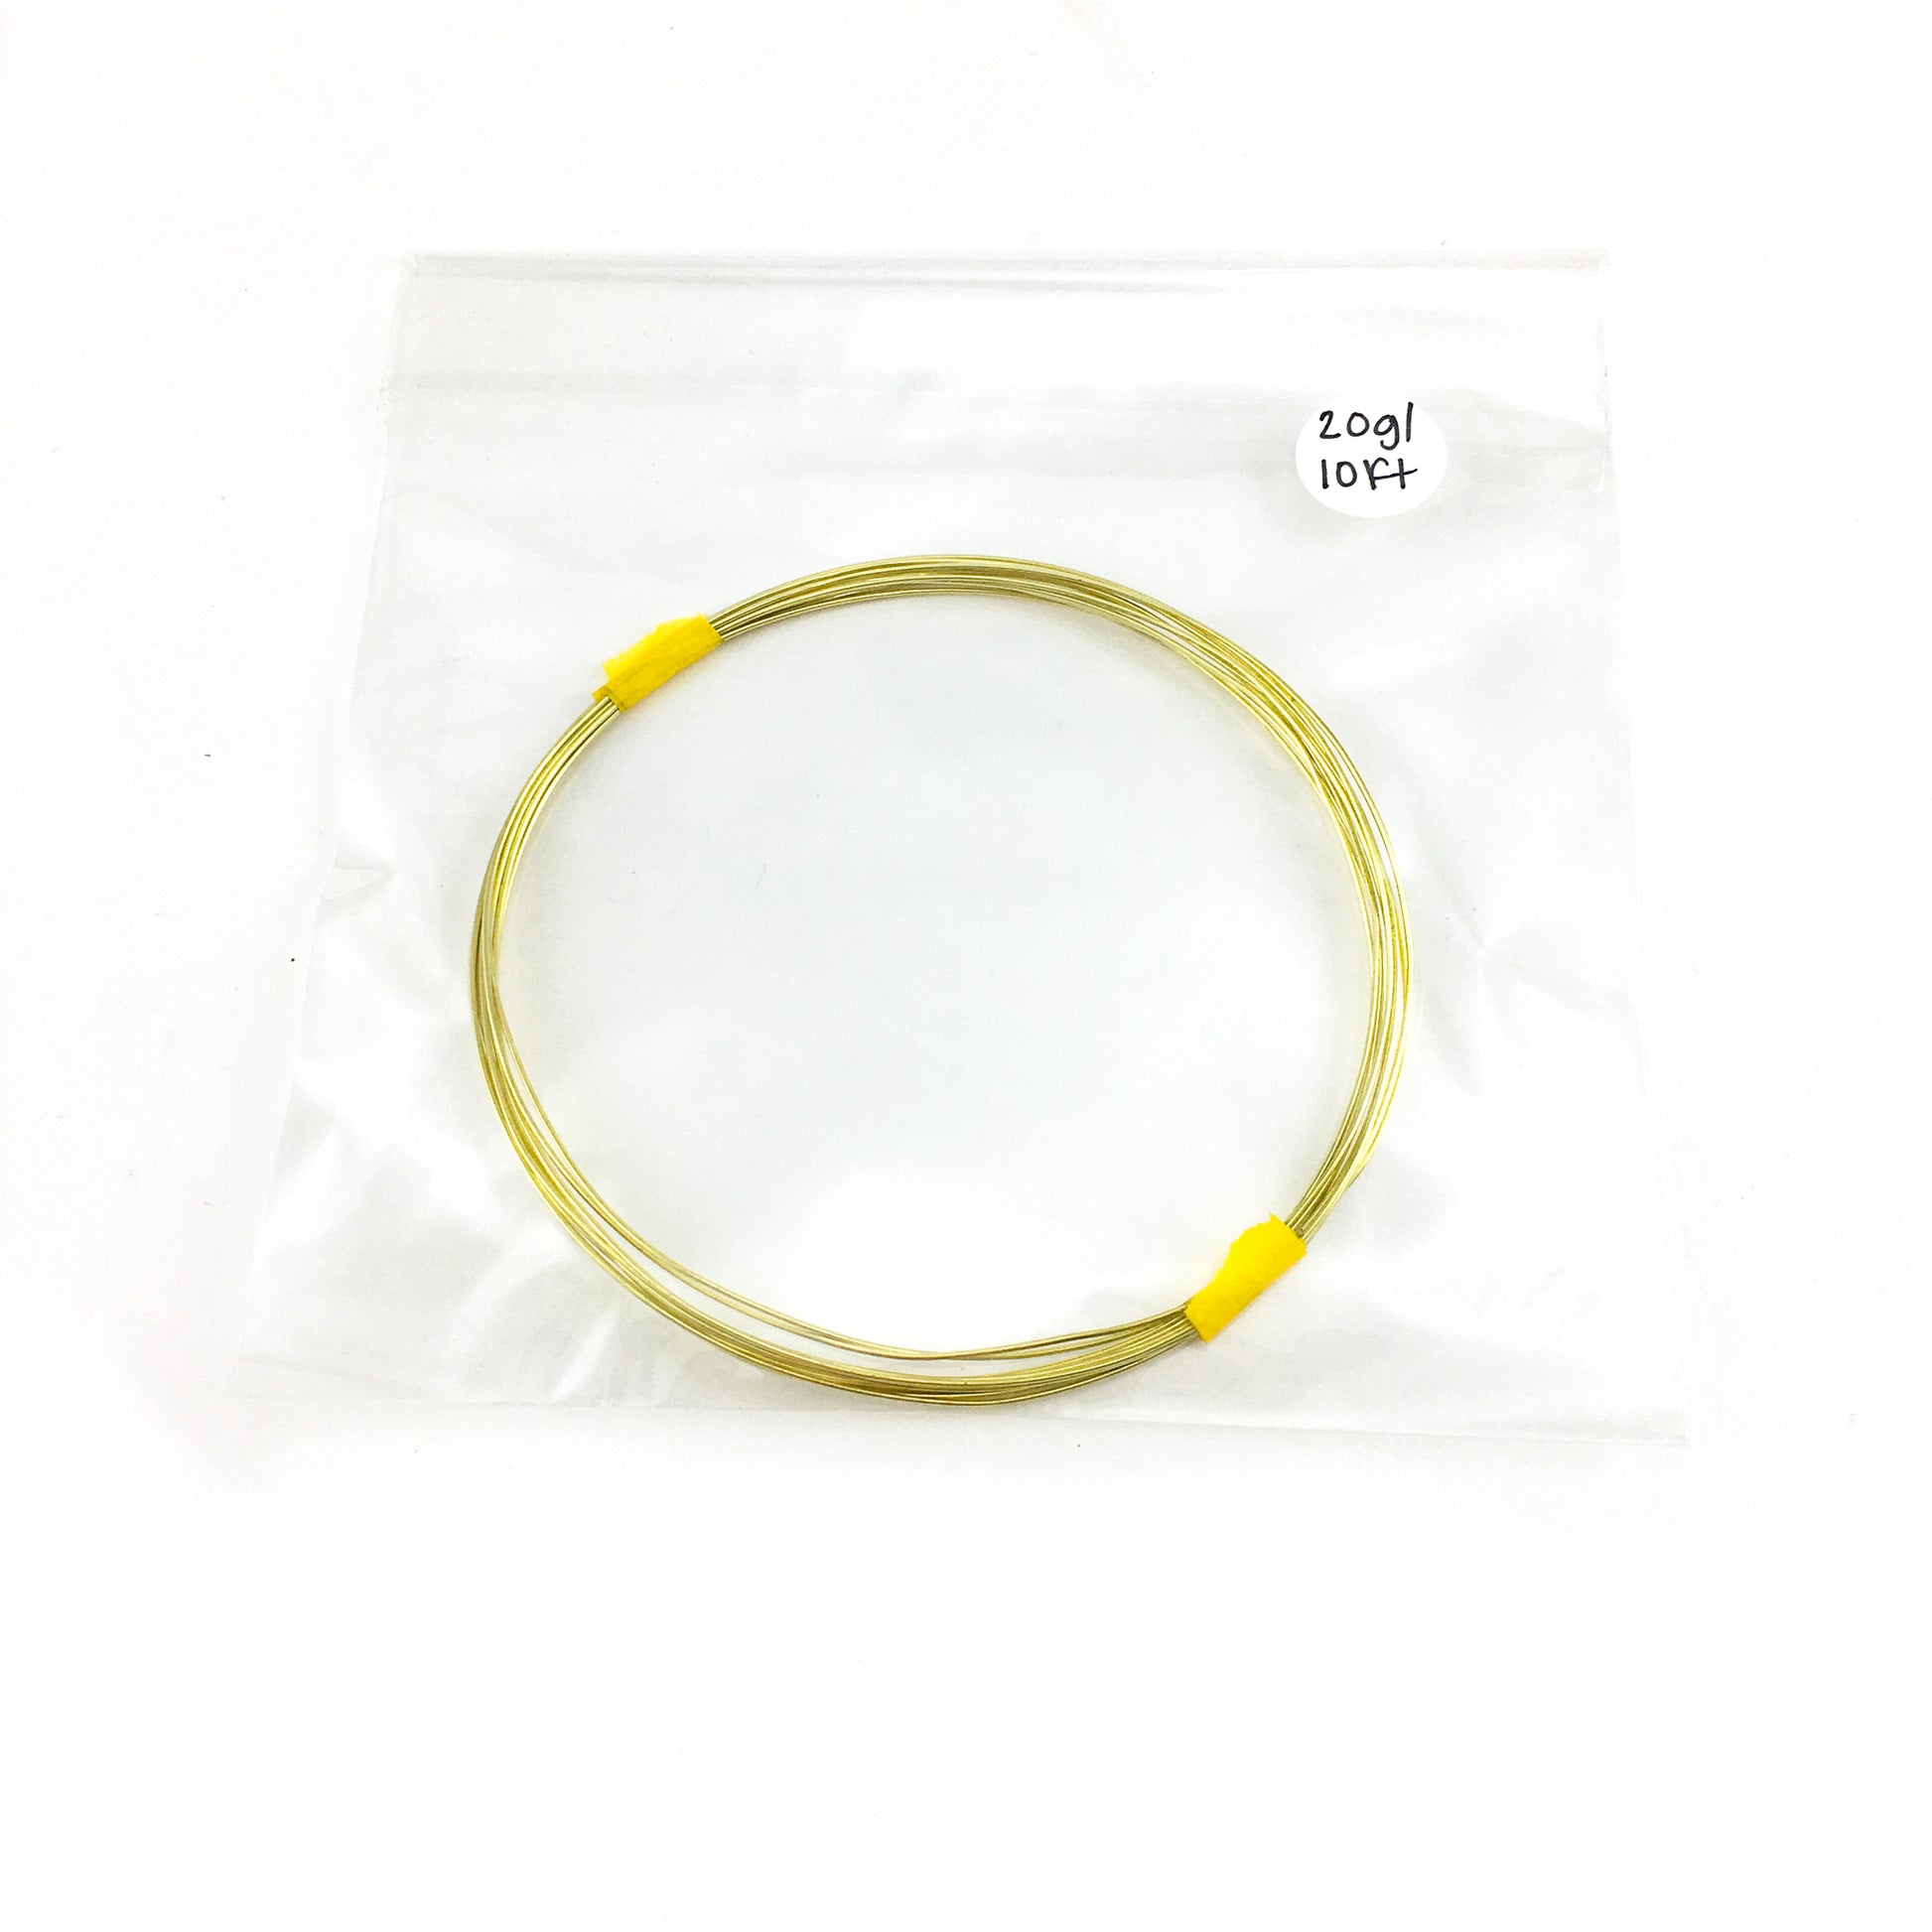 Round Brass Wire - Soft Temper a.k.a. Dead Soft - 10 ft. - 20g by Contenti - K. A. Artist Shop